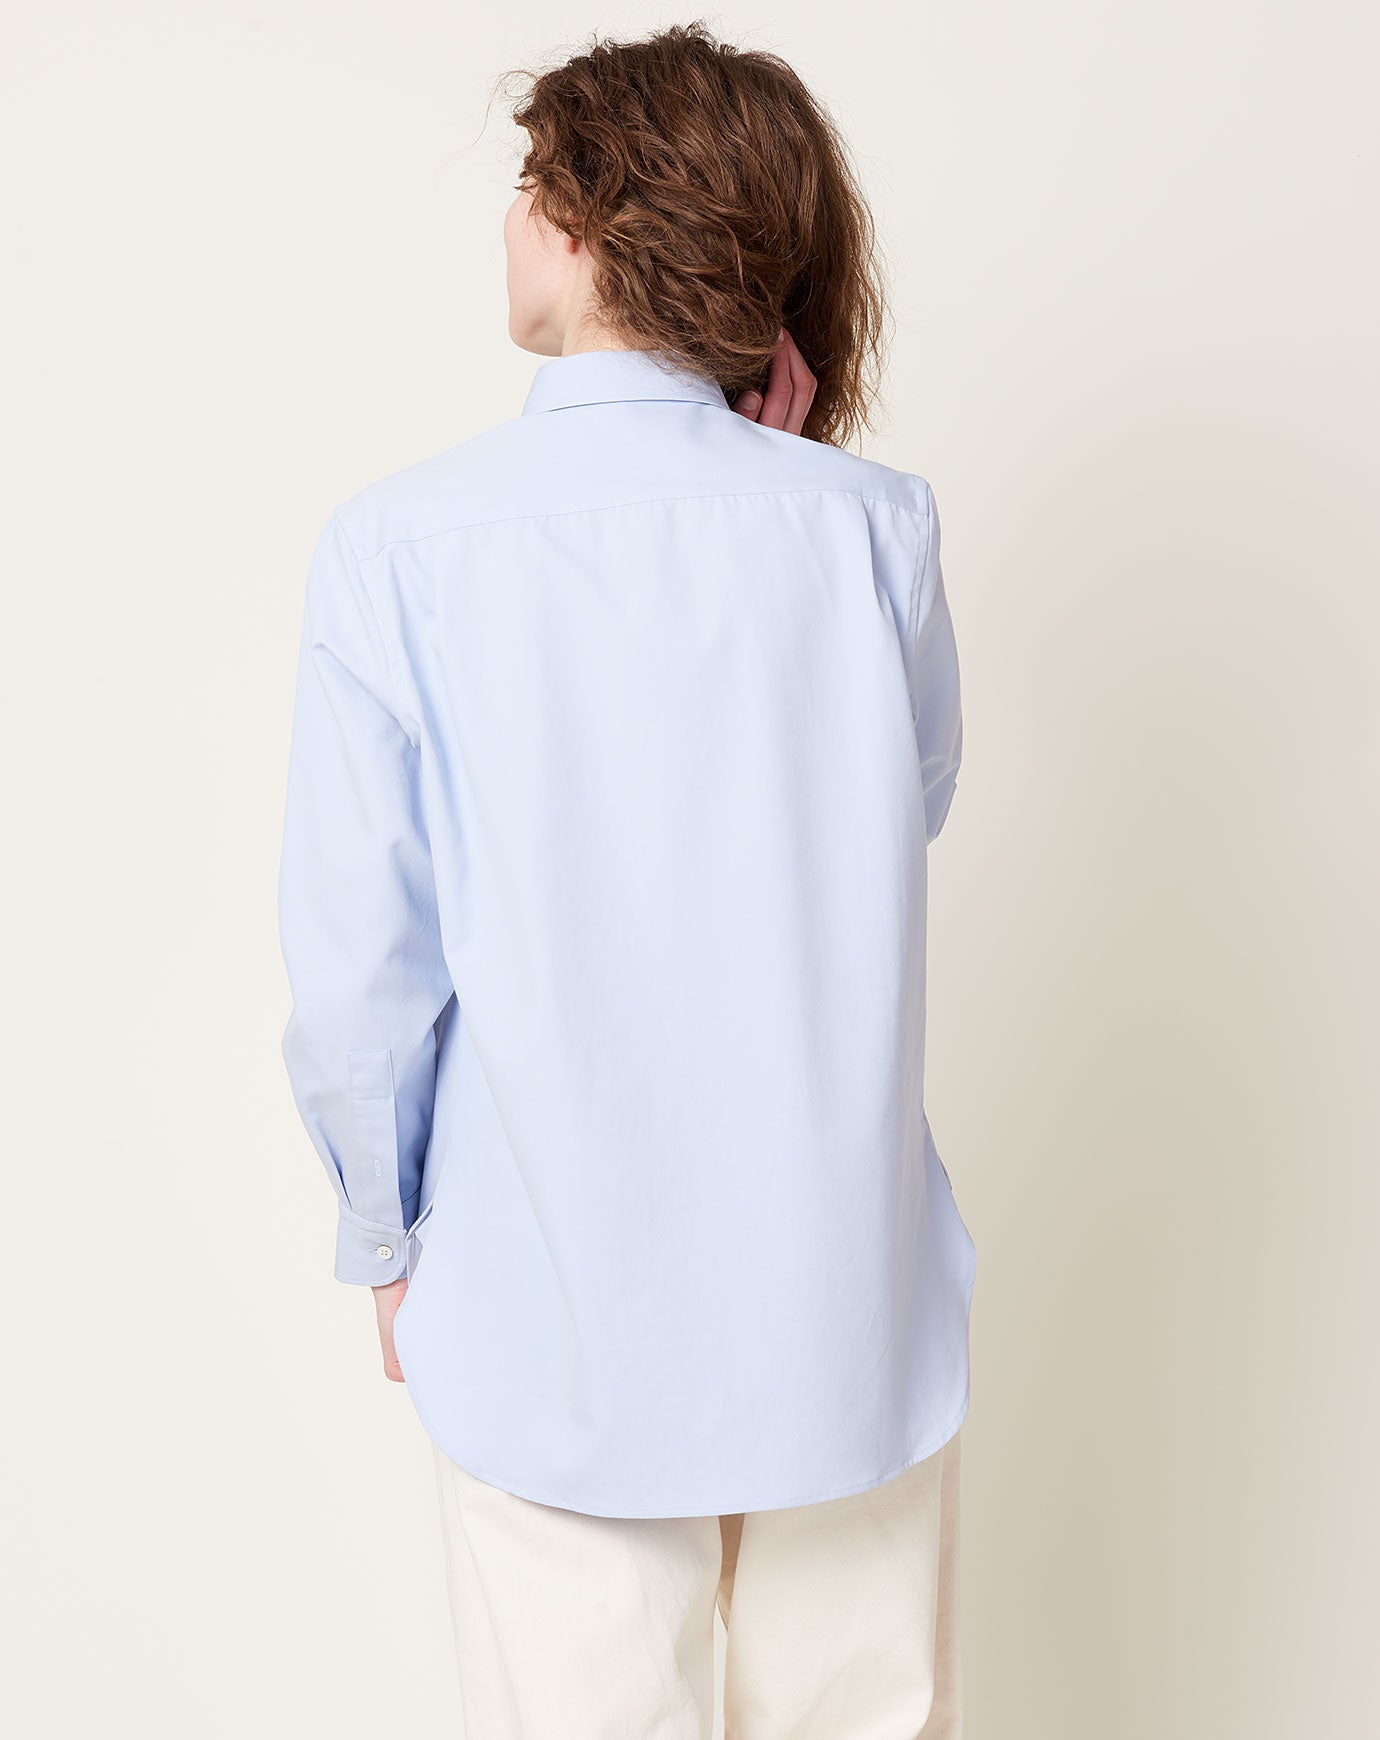 Bissett Shirt in Mist | Studio Nicholson | Covet + Lou | Covet + Lou